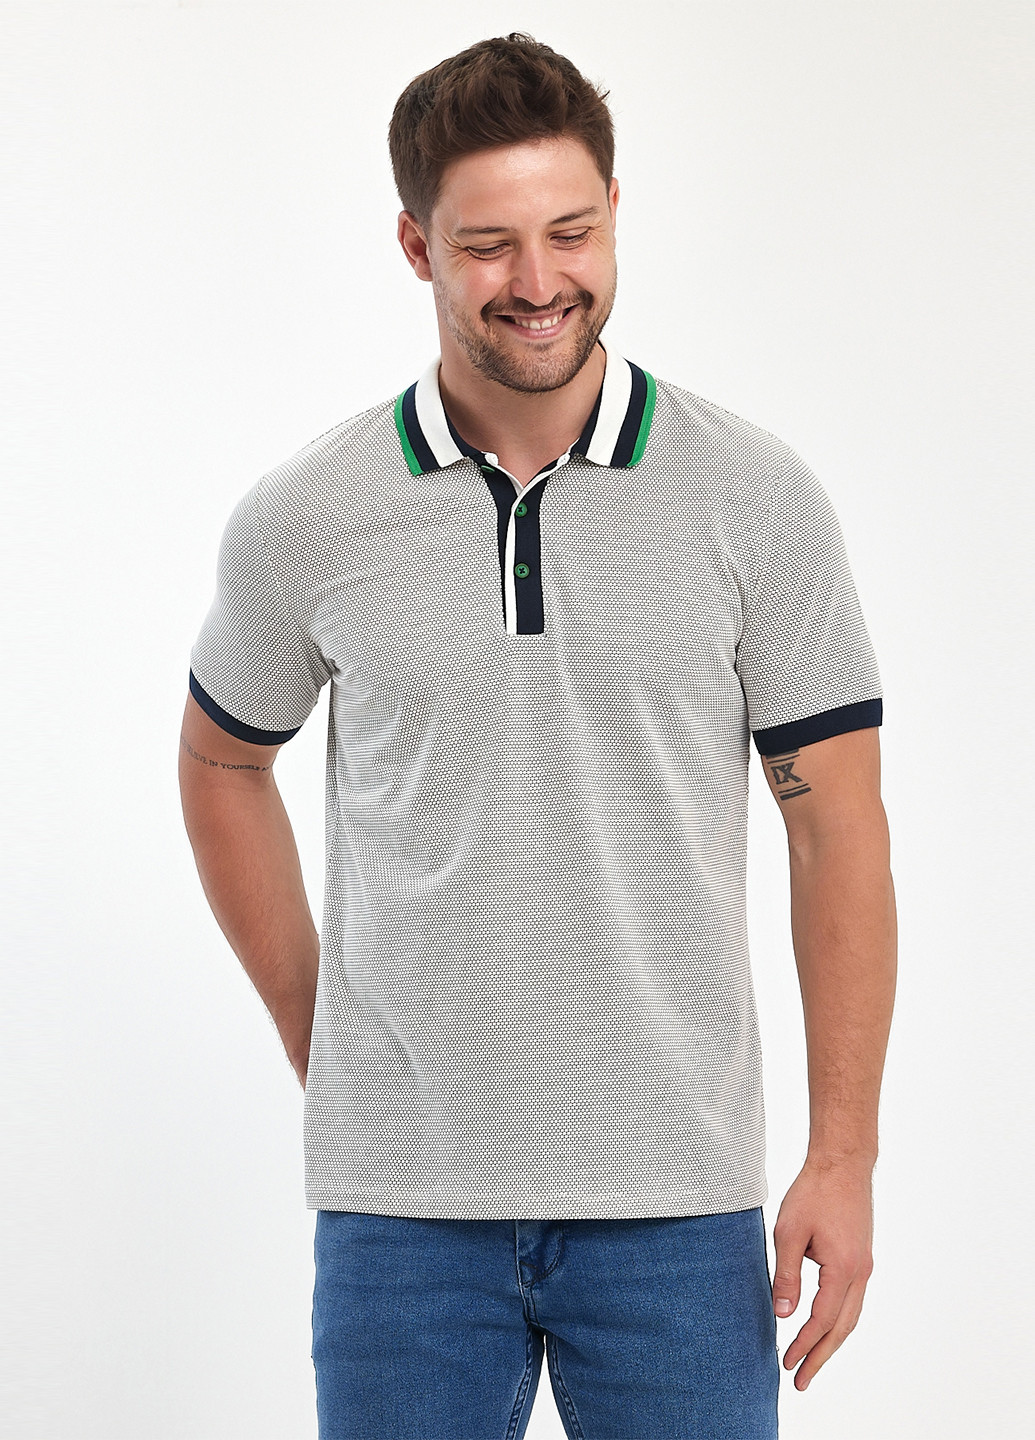 Белая футболка-поло для мужчин Trend Collection с геометрическим узором